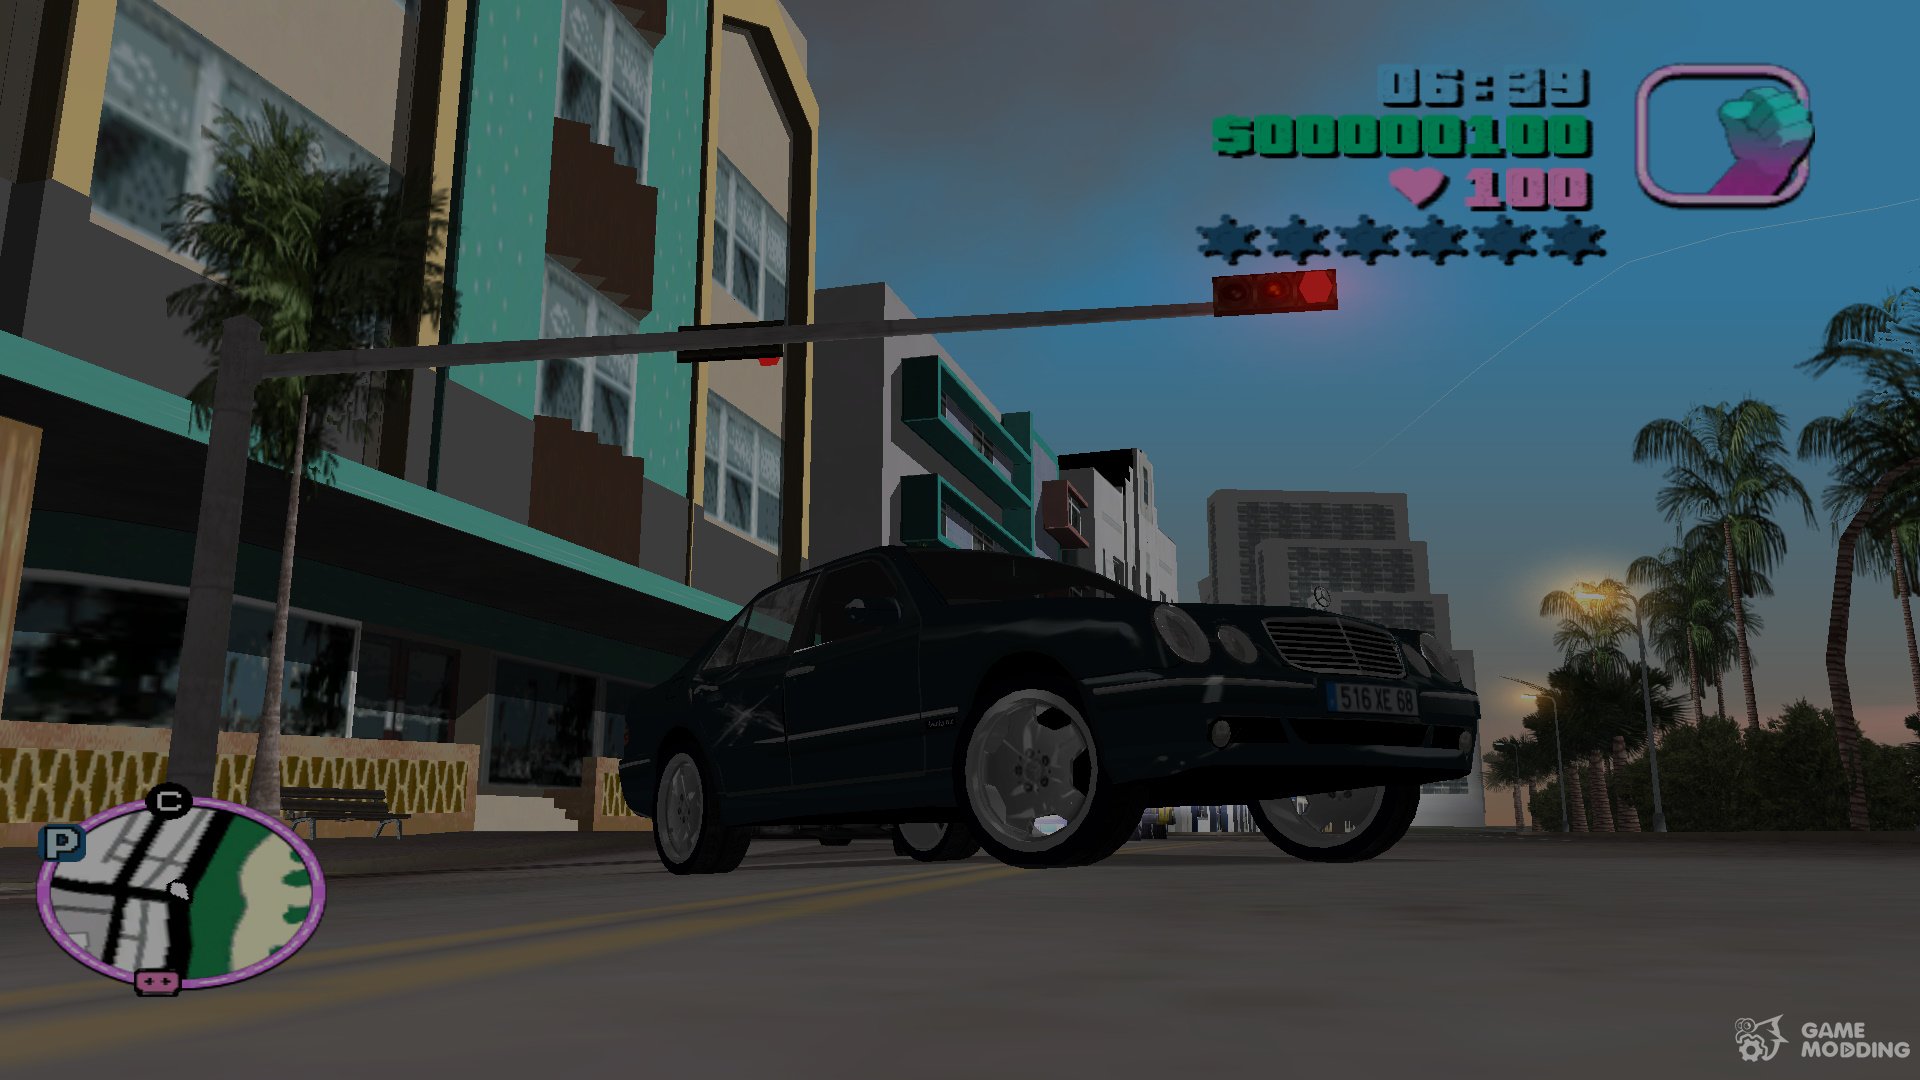 100 New Vehicles Mod For GTA Vice City 2 - GTA: Vice City